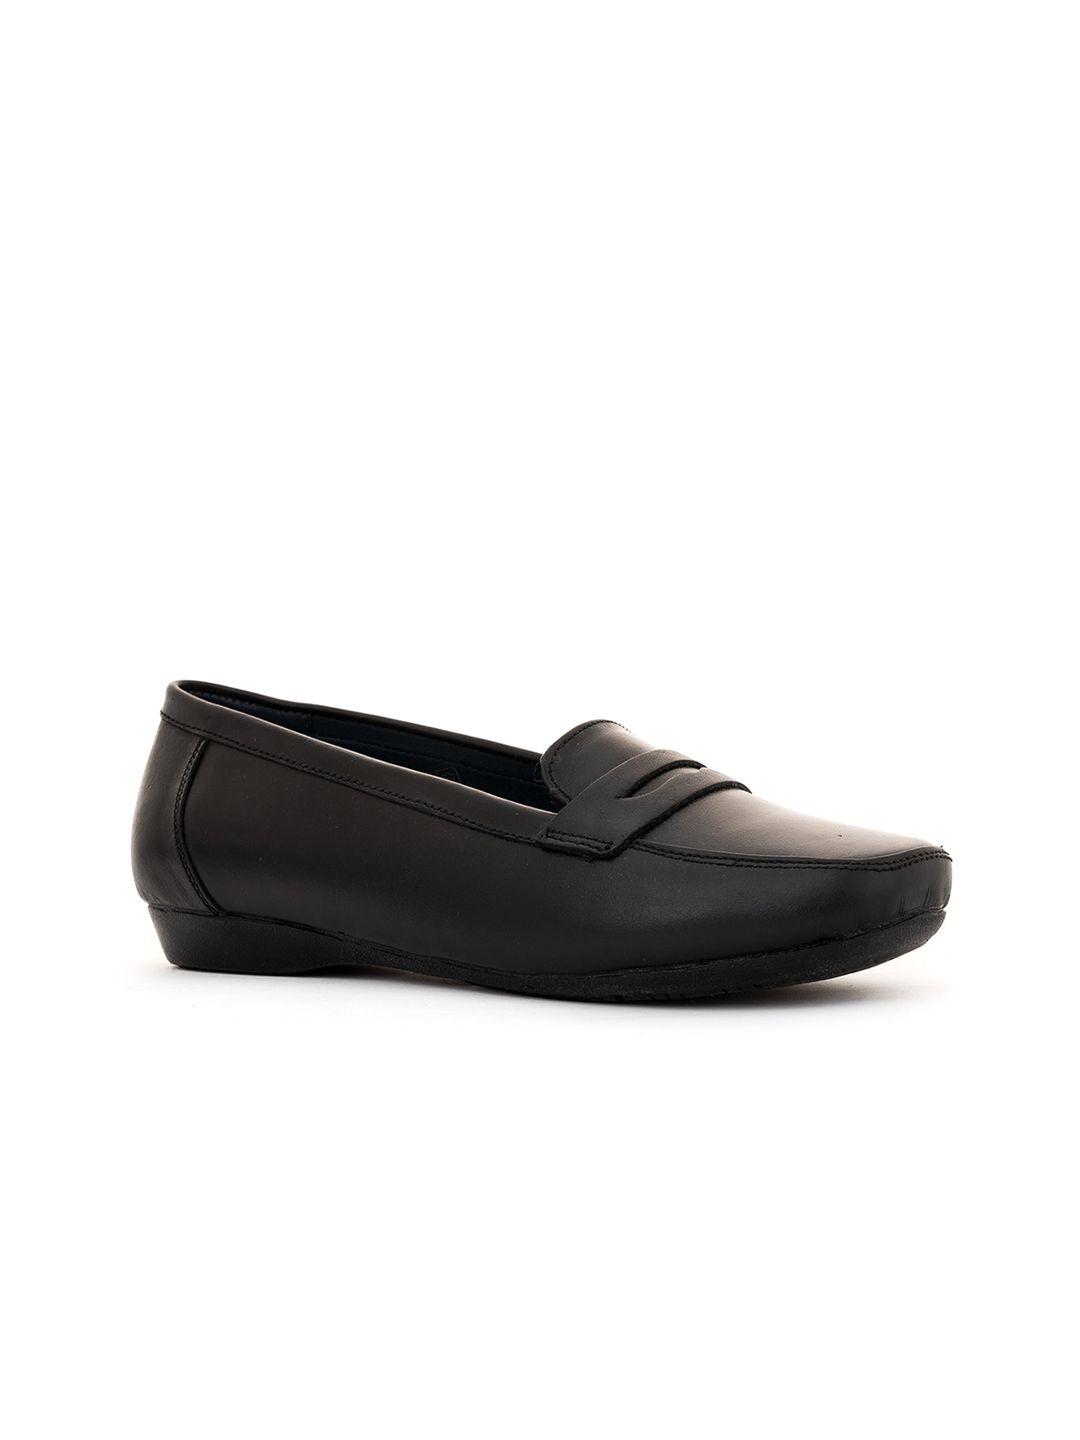 khadims women black leather loafers